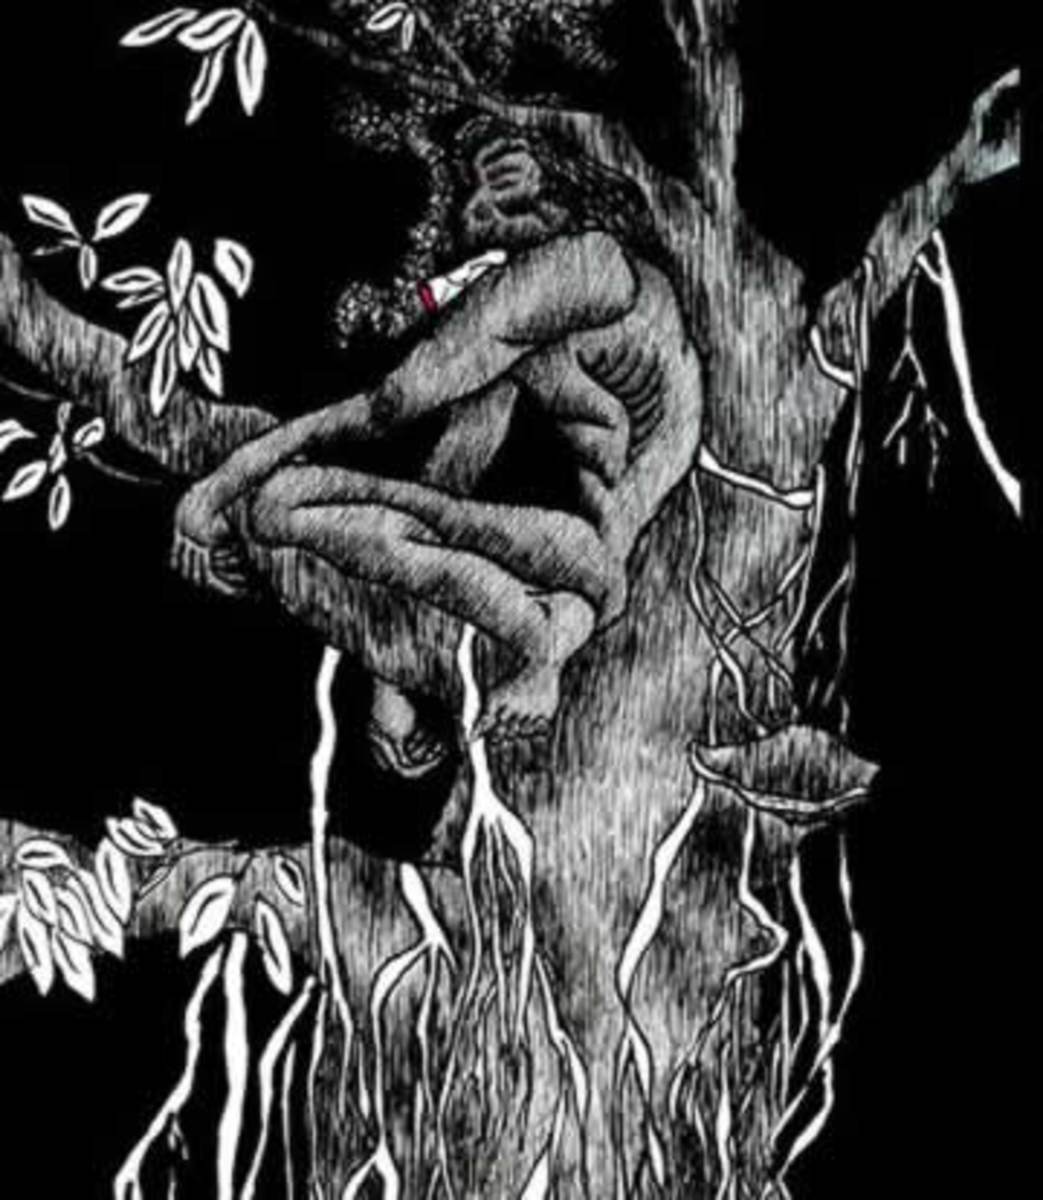 Legend and Stories of the Philippine Kapre Tree Demon